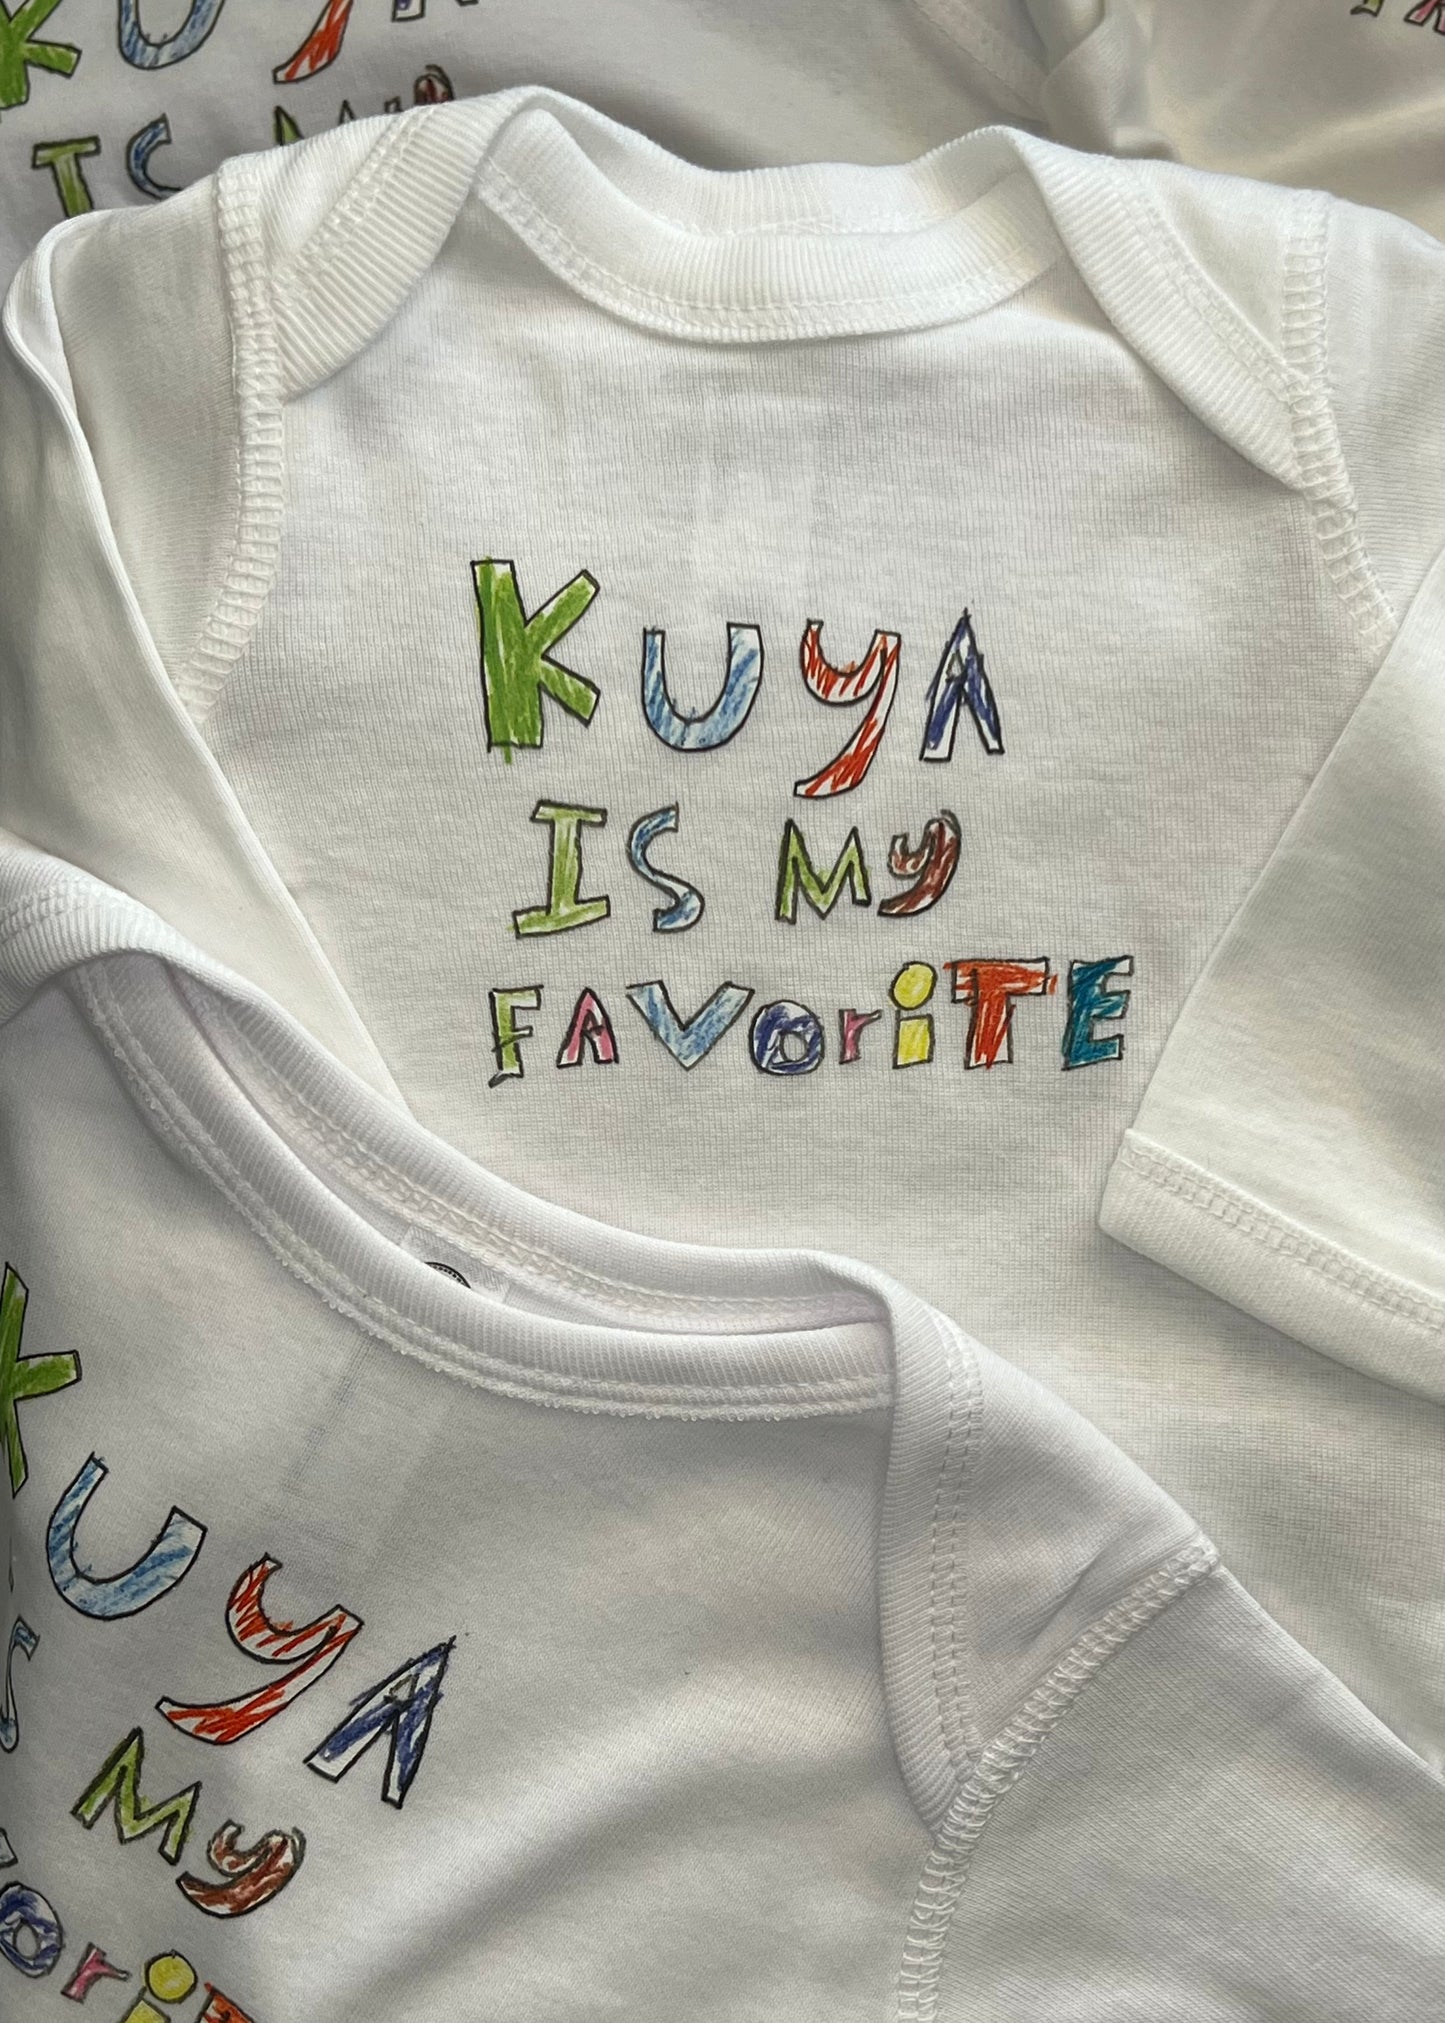 Kuya is my Favorite (Baby)